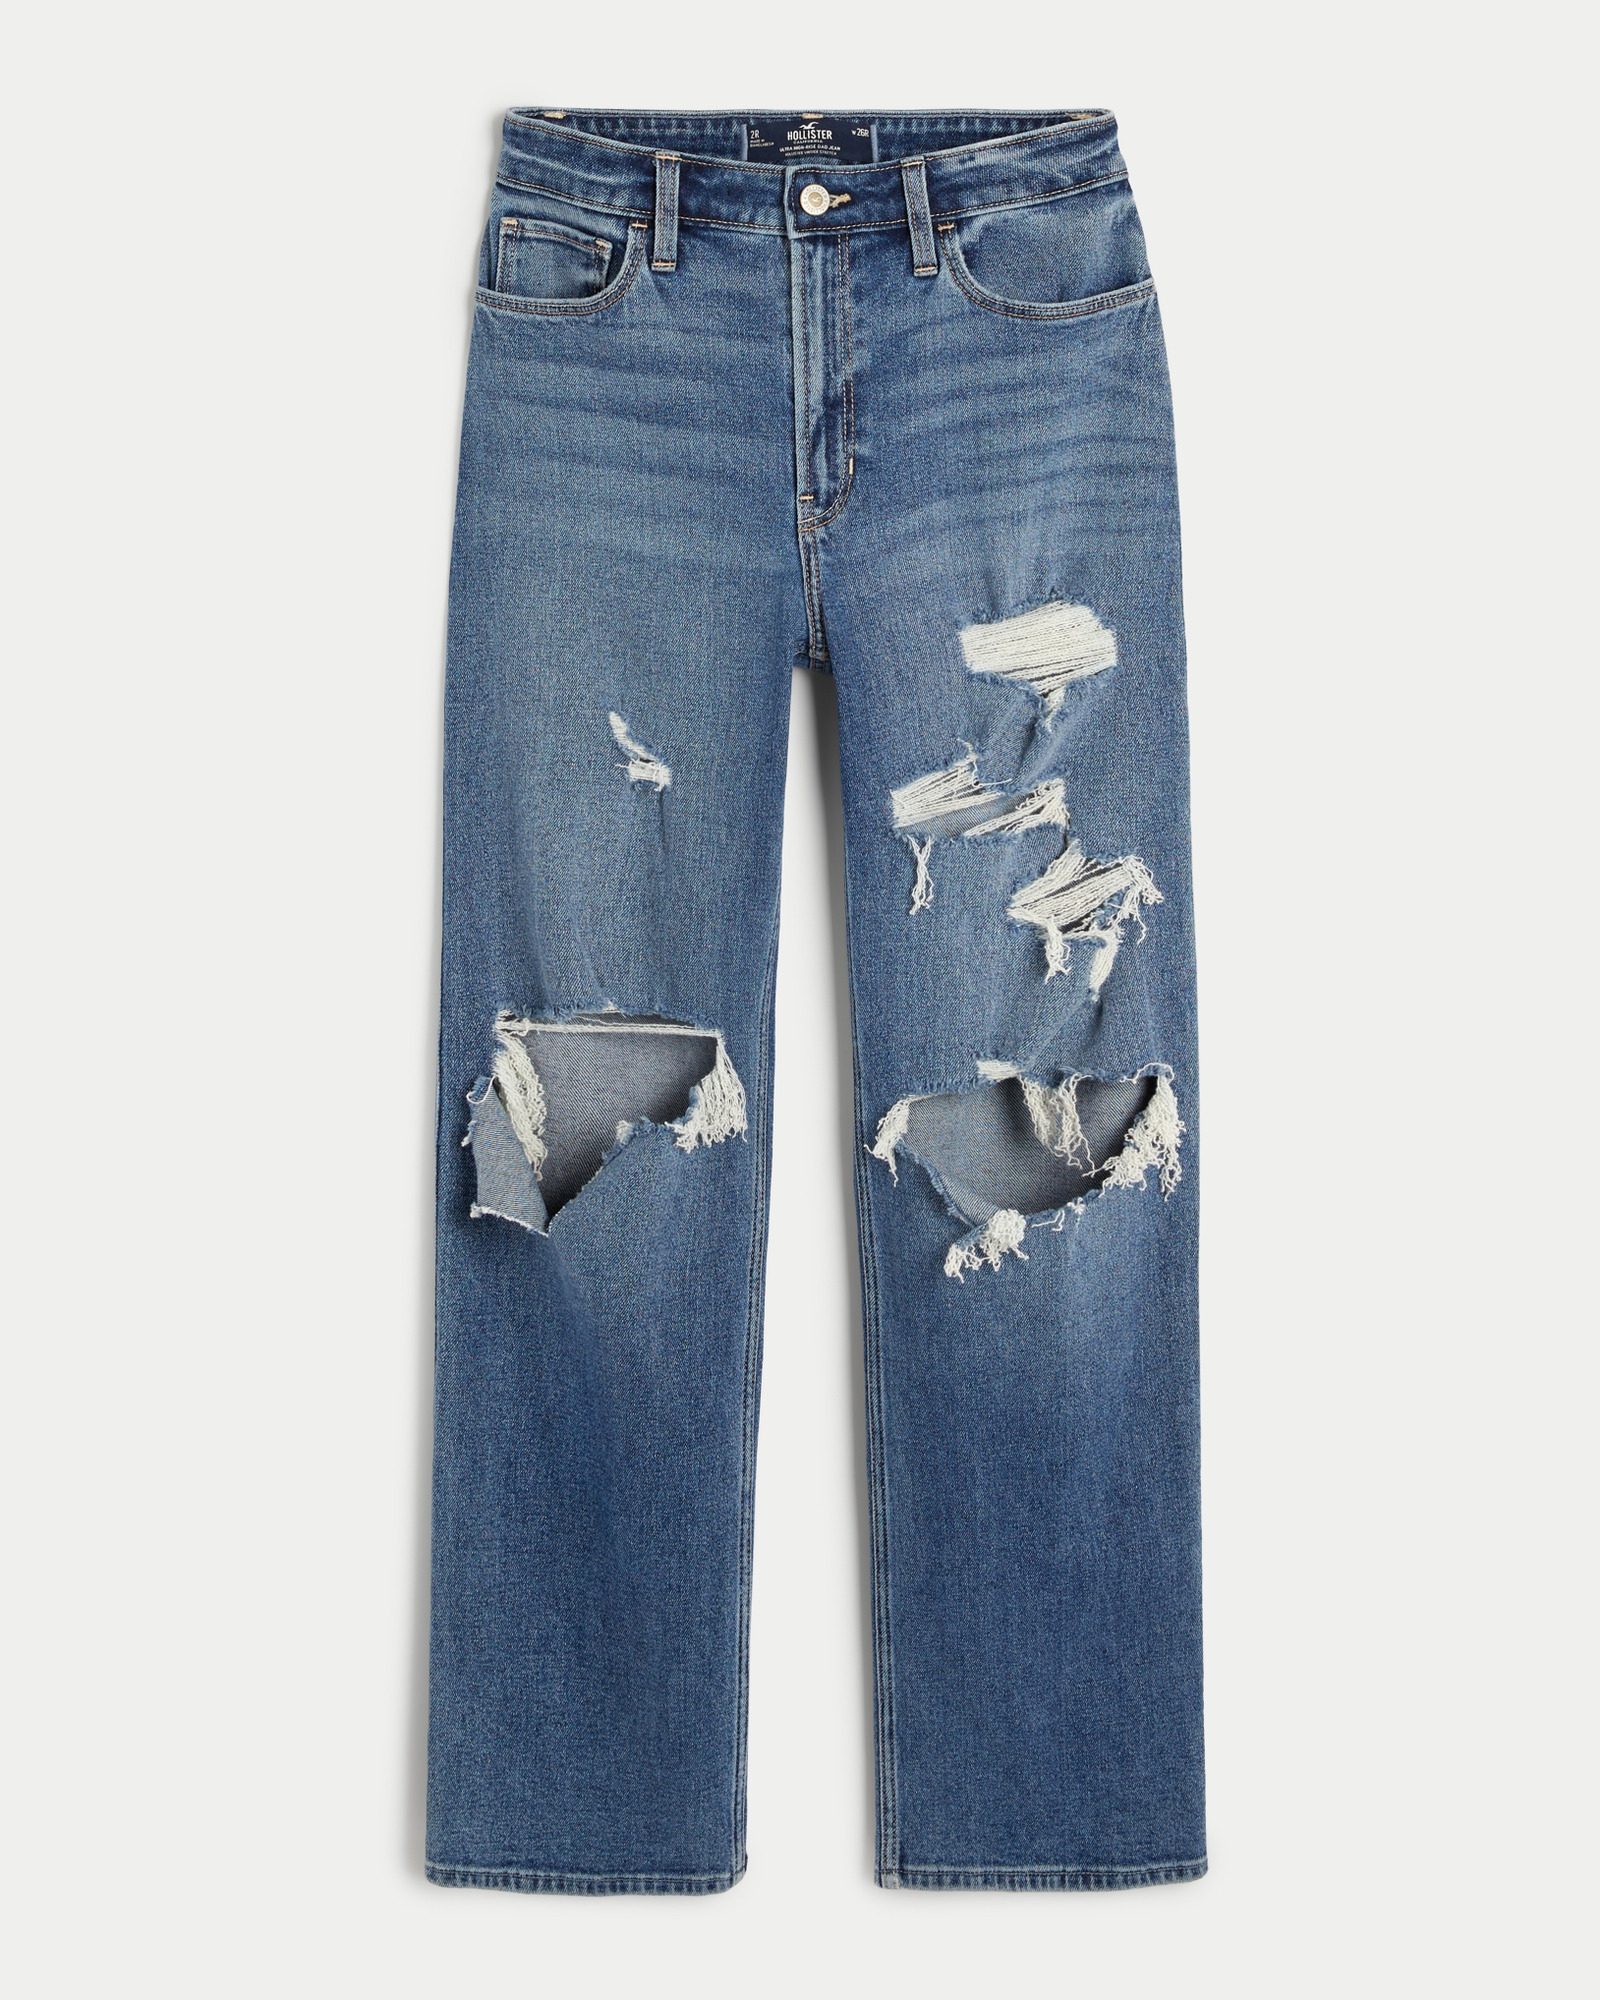 Hollister shredded boyfriend jeans in light blue wash - ShopStyle